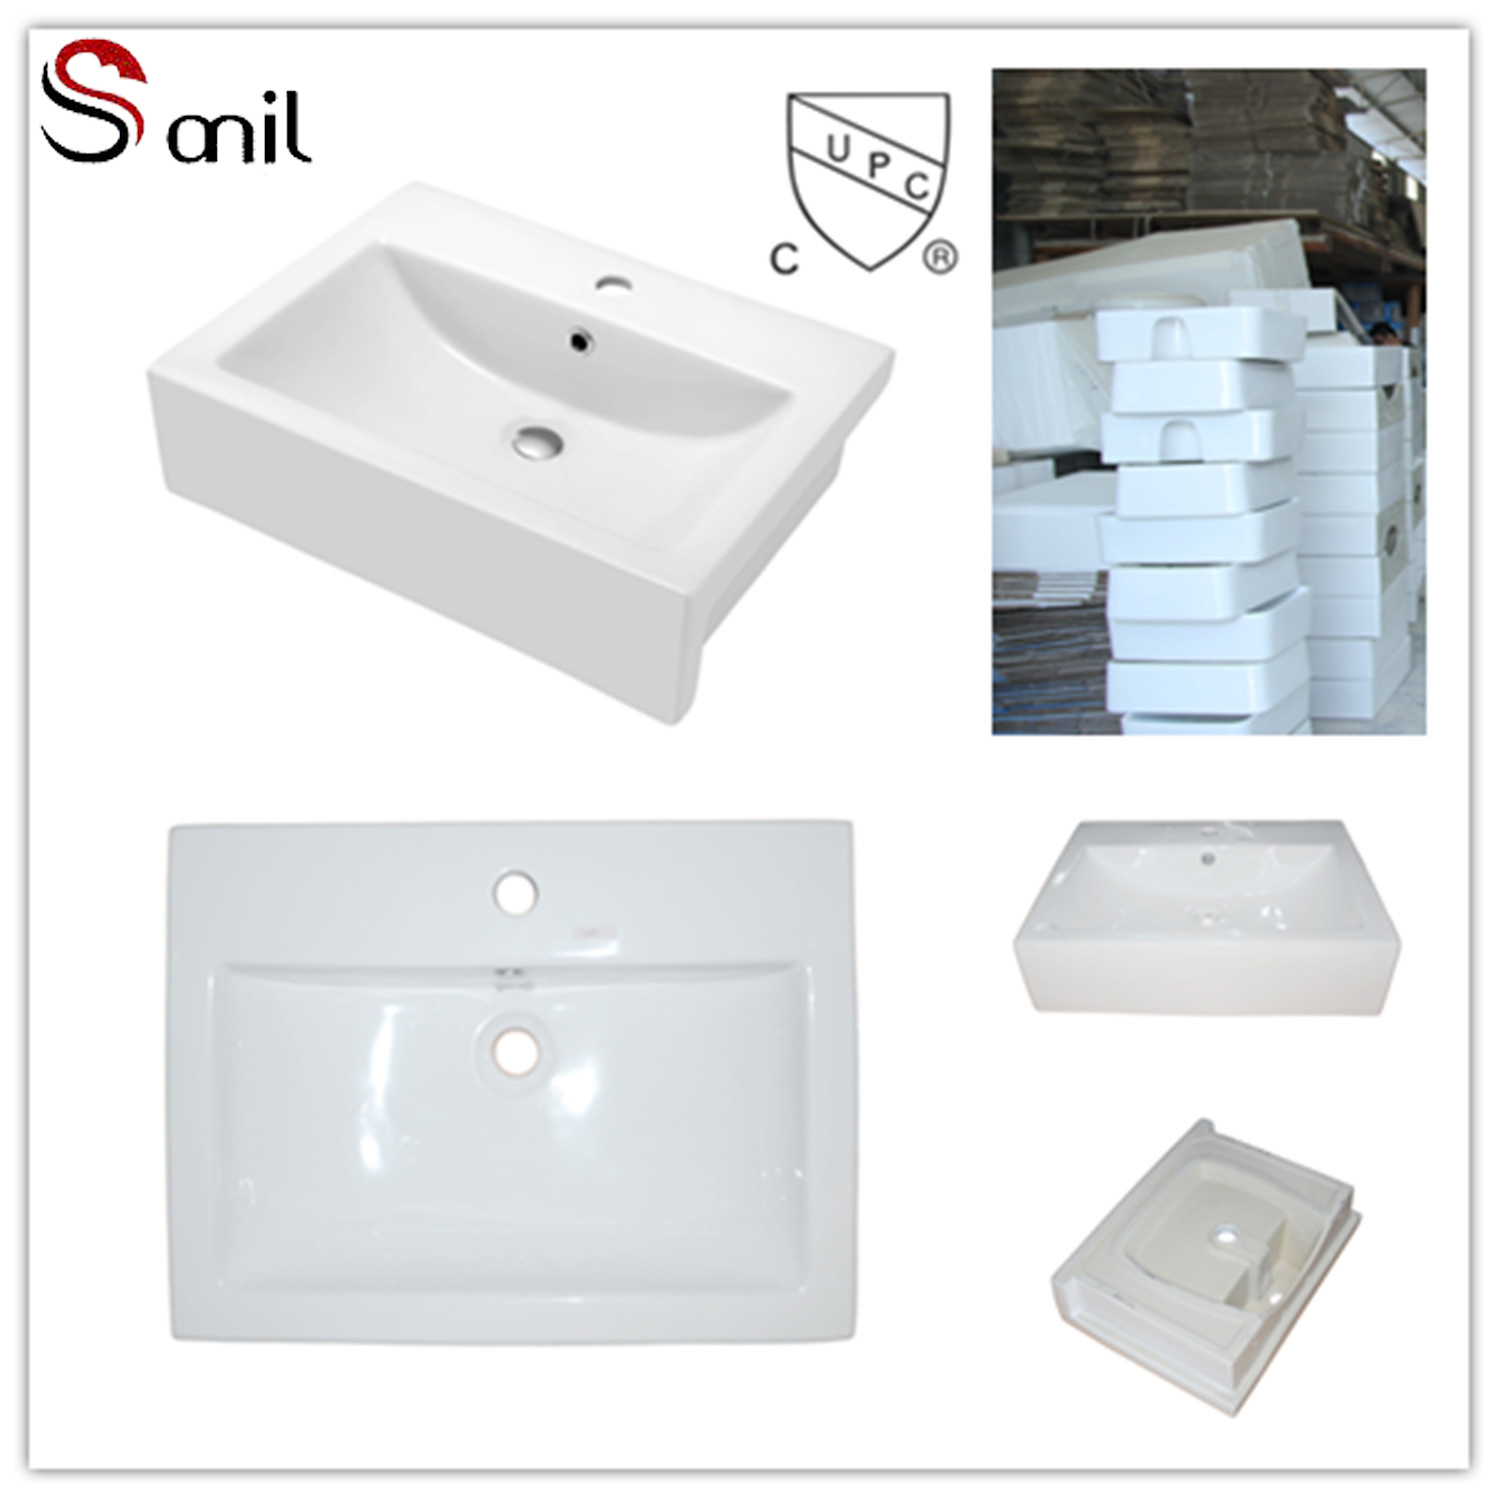 Wholesale 600mm Rectangular Bathroom Porcelain Rectangular Upc Inset Sink (SN120-080)